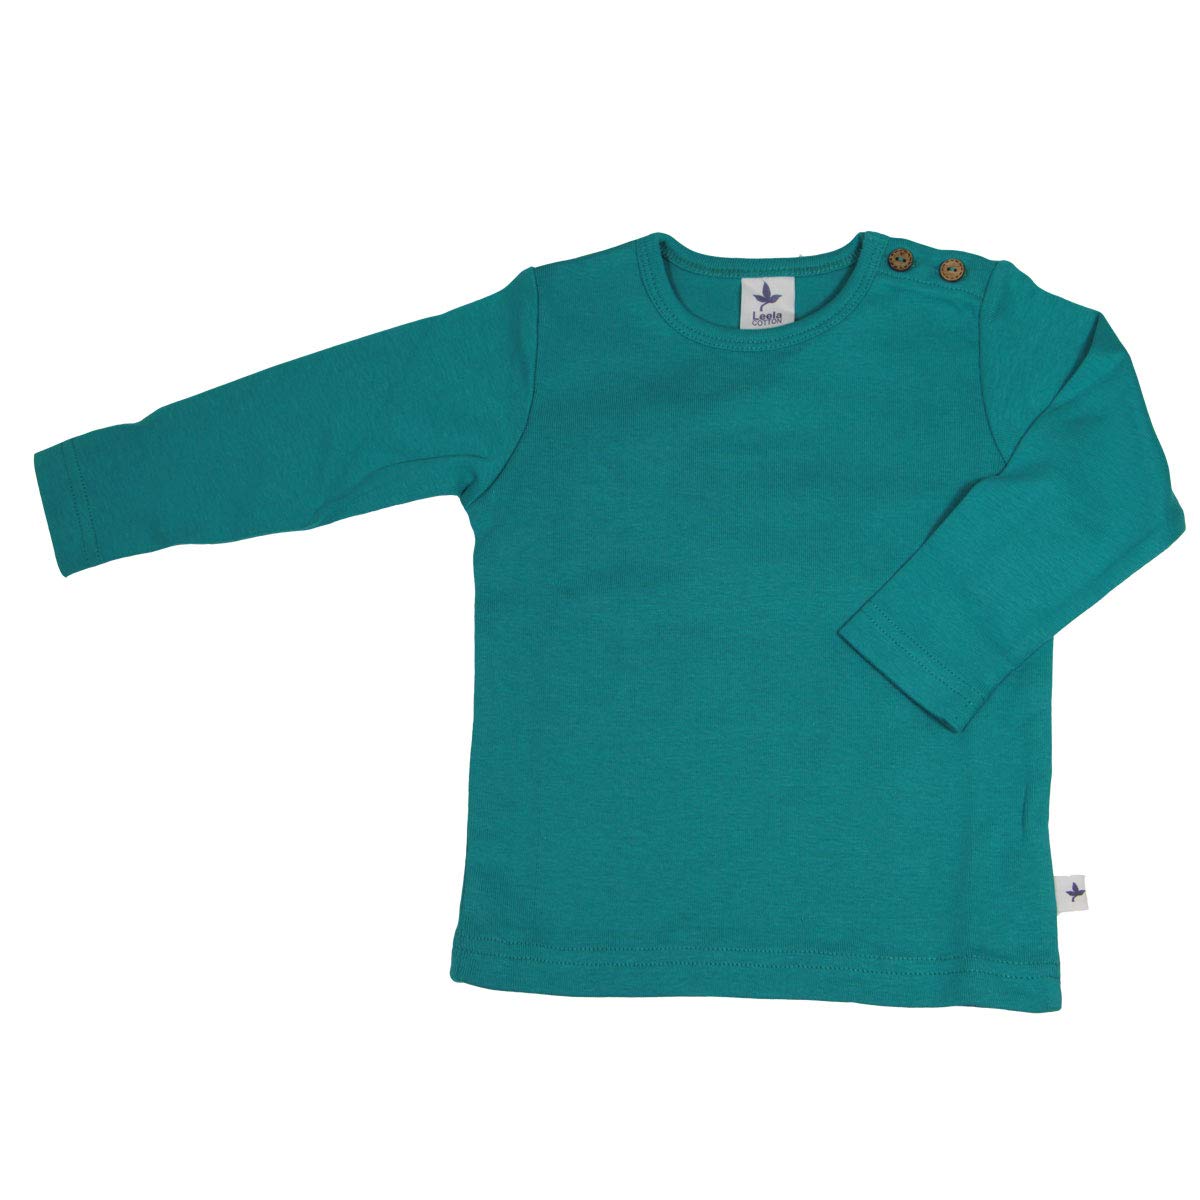 Baby Kinder Langarmshirt Unisex Bio-Baumwolle T-Shirt Shirt Jungen Mädchen Lapis (DE/NL/SE/PL, Numerisch, 128, Regular, Türkis/Lapis)